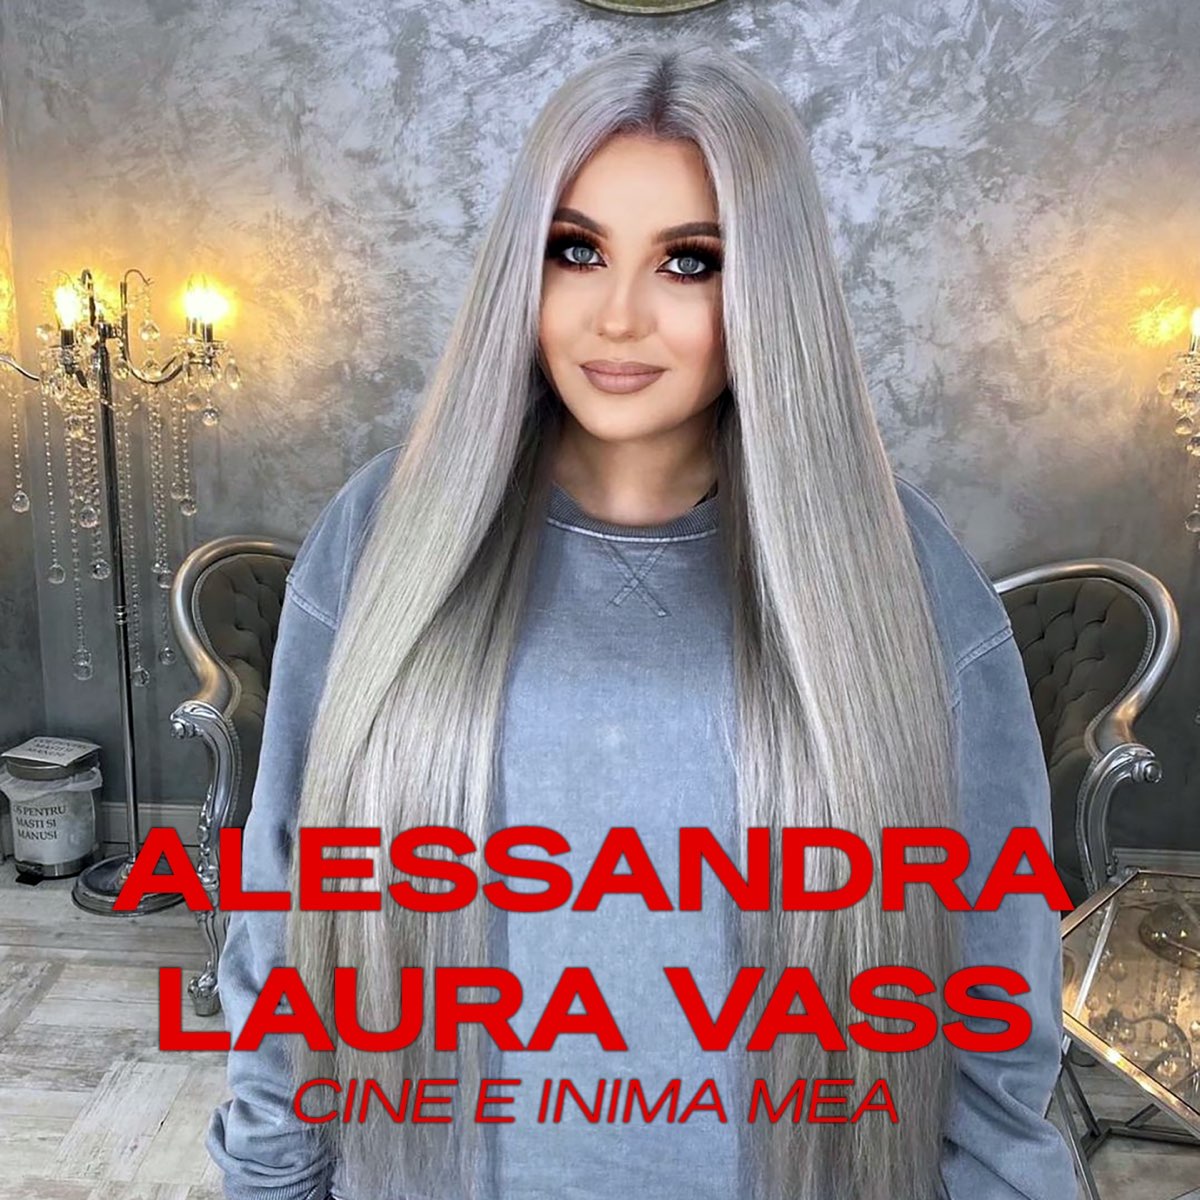 Cine E Inima Mea - Single by Alessandra & Laura Vass on Apple Music